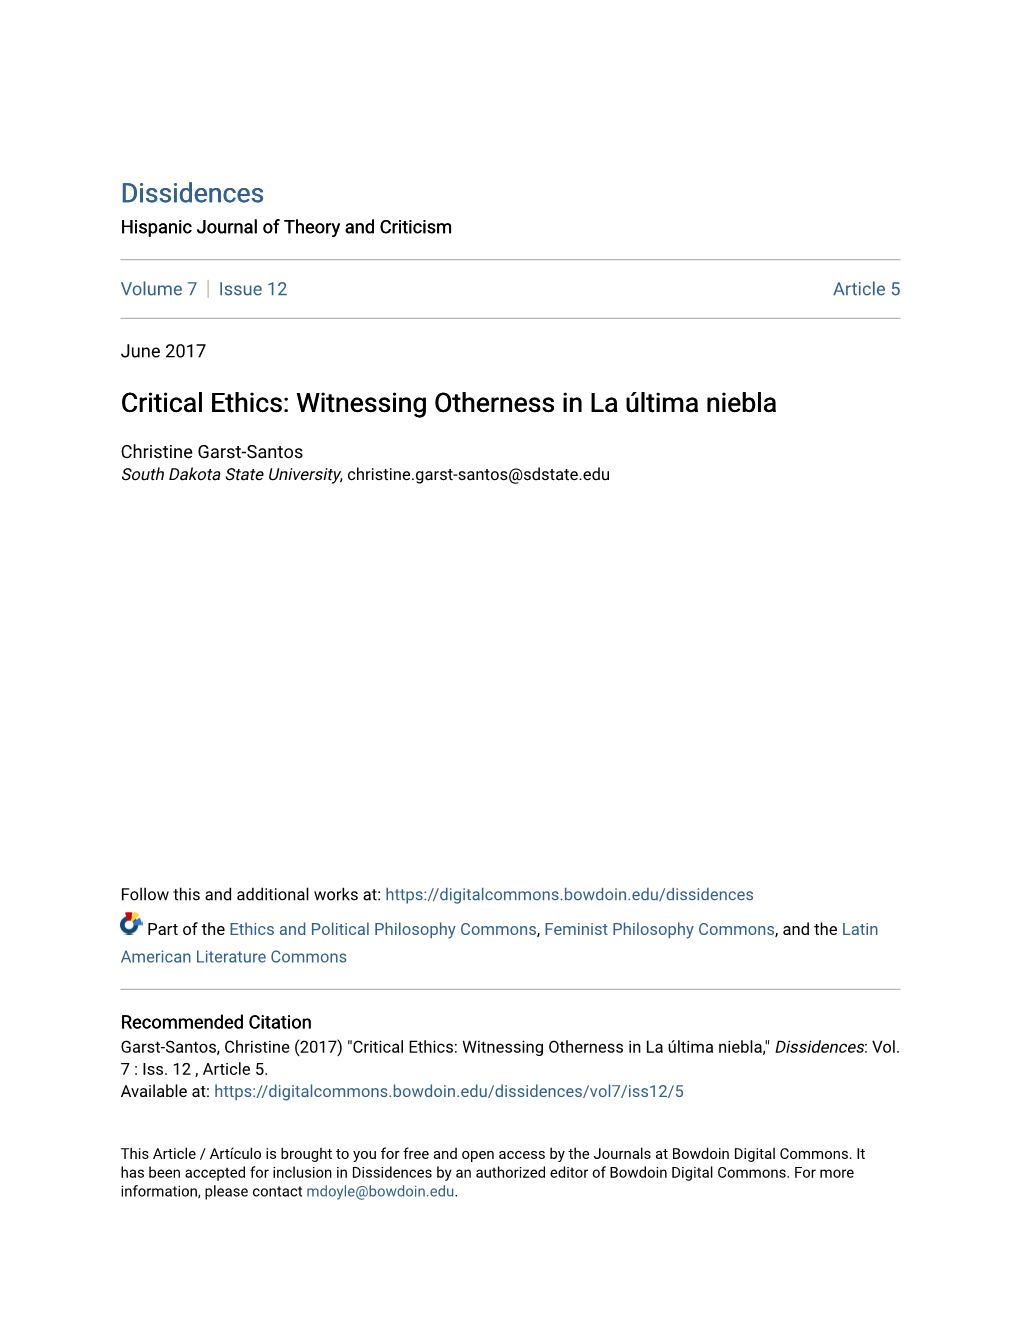 Critical Ethics: Witnessing Otherness in La Última Niebla